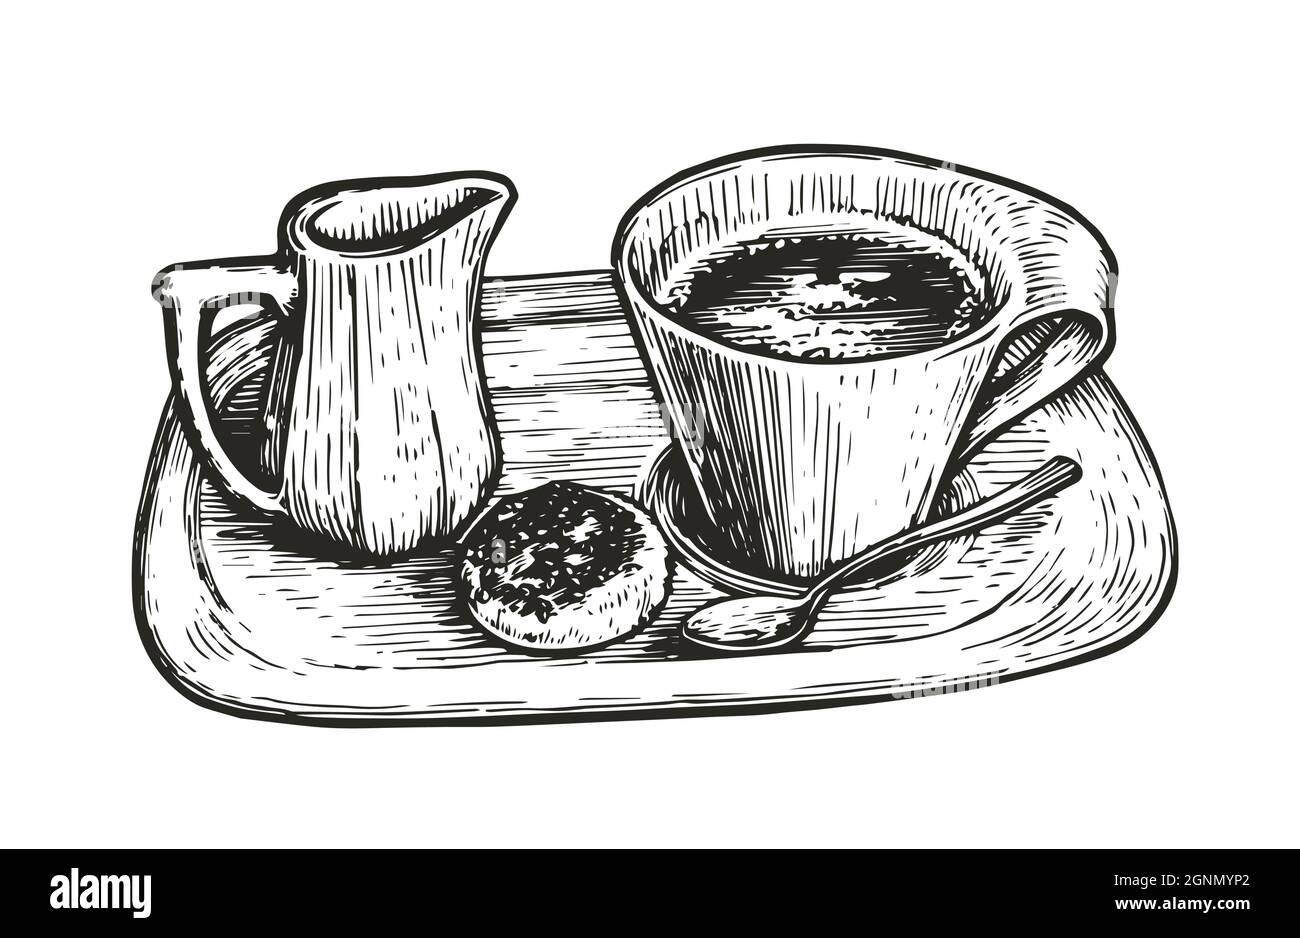 Tasse Kaffee auf Tablett. Skizze des Lebensmittelkonzepts. Vektor-Illustration für Café oder Restaurant-Menü Dekoration Stock Vektor